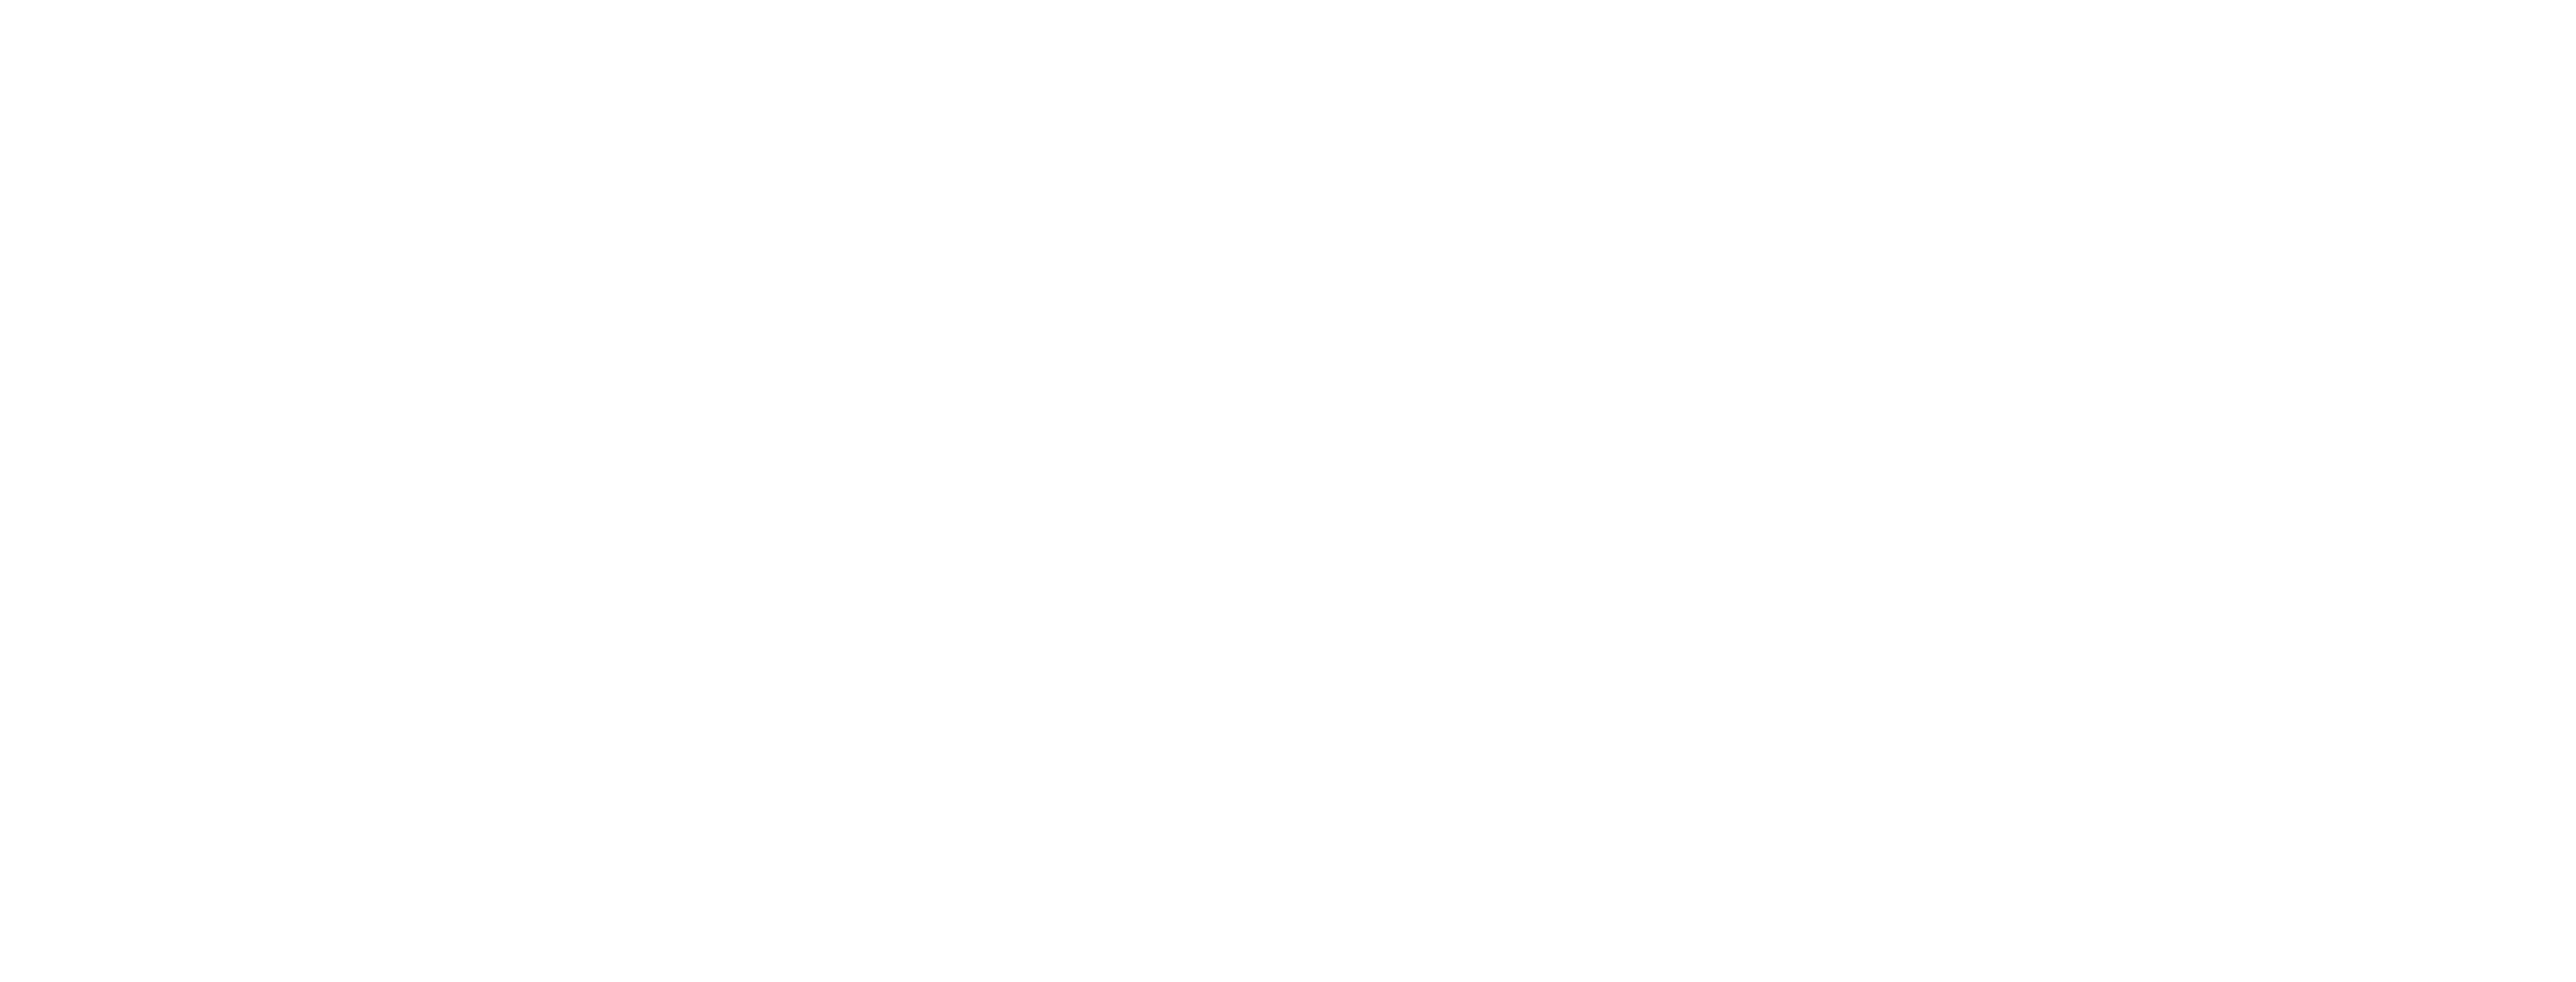 Patil Amruttulya Franchise by Garv Kumar - Issuu